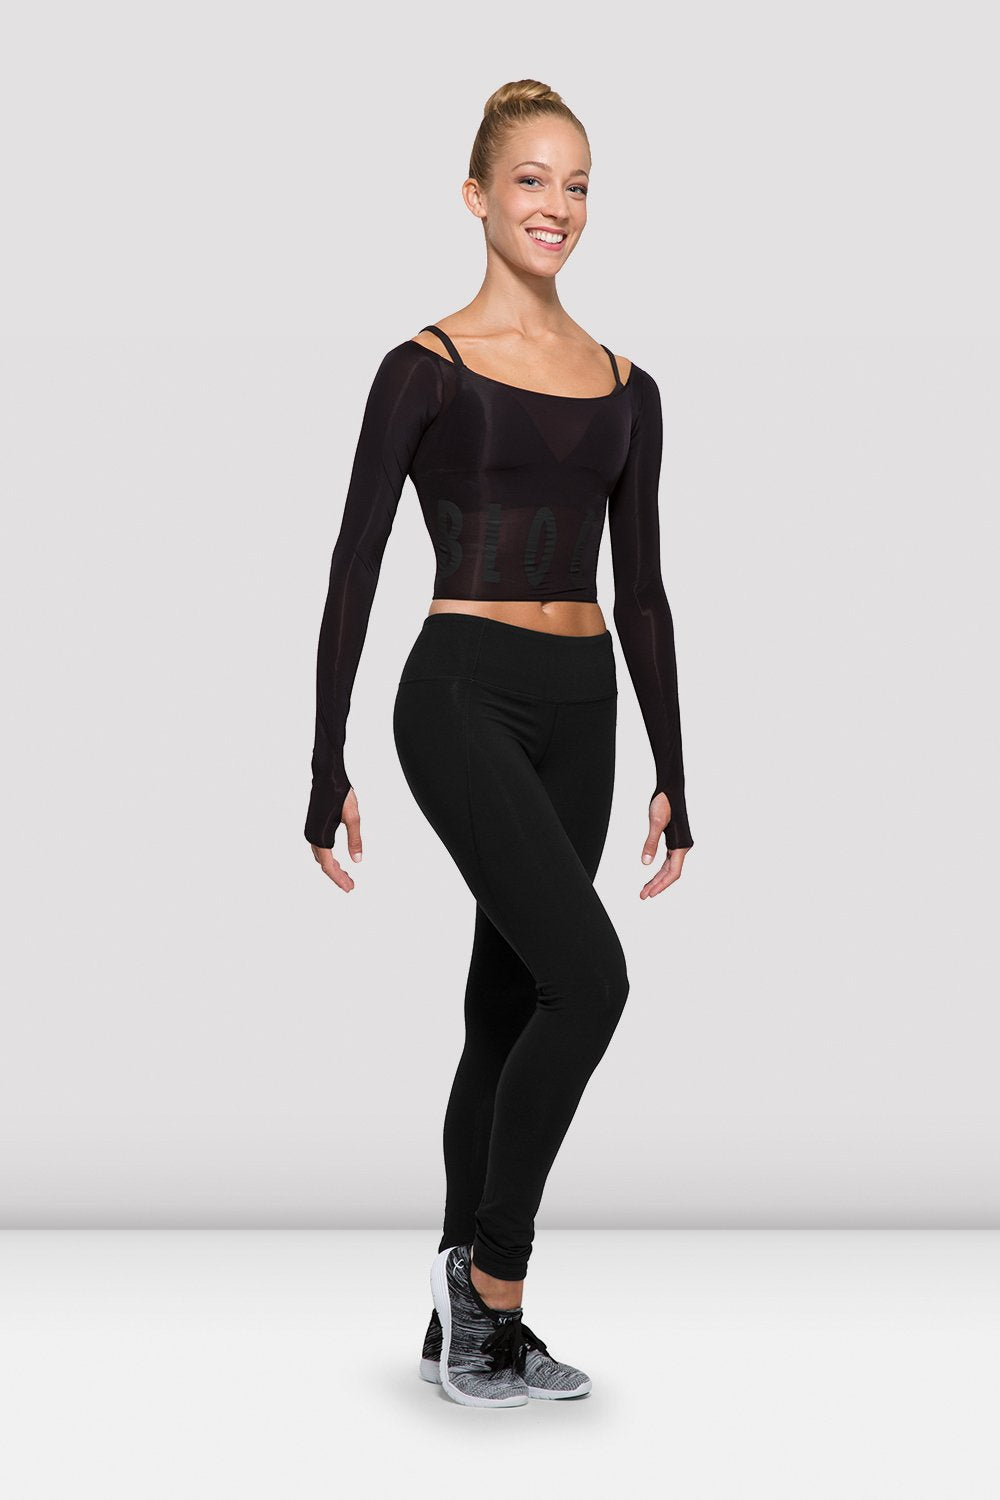 Women's Long Sleeve Yoga Workout Top Thumb Hole Activewear Yoga Top Black,  Large